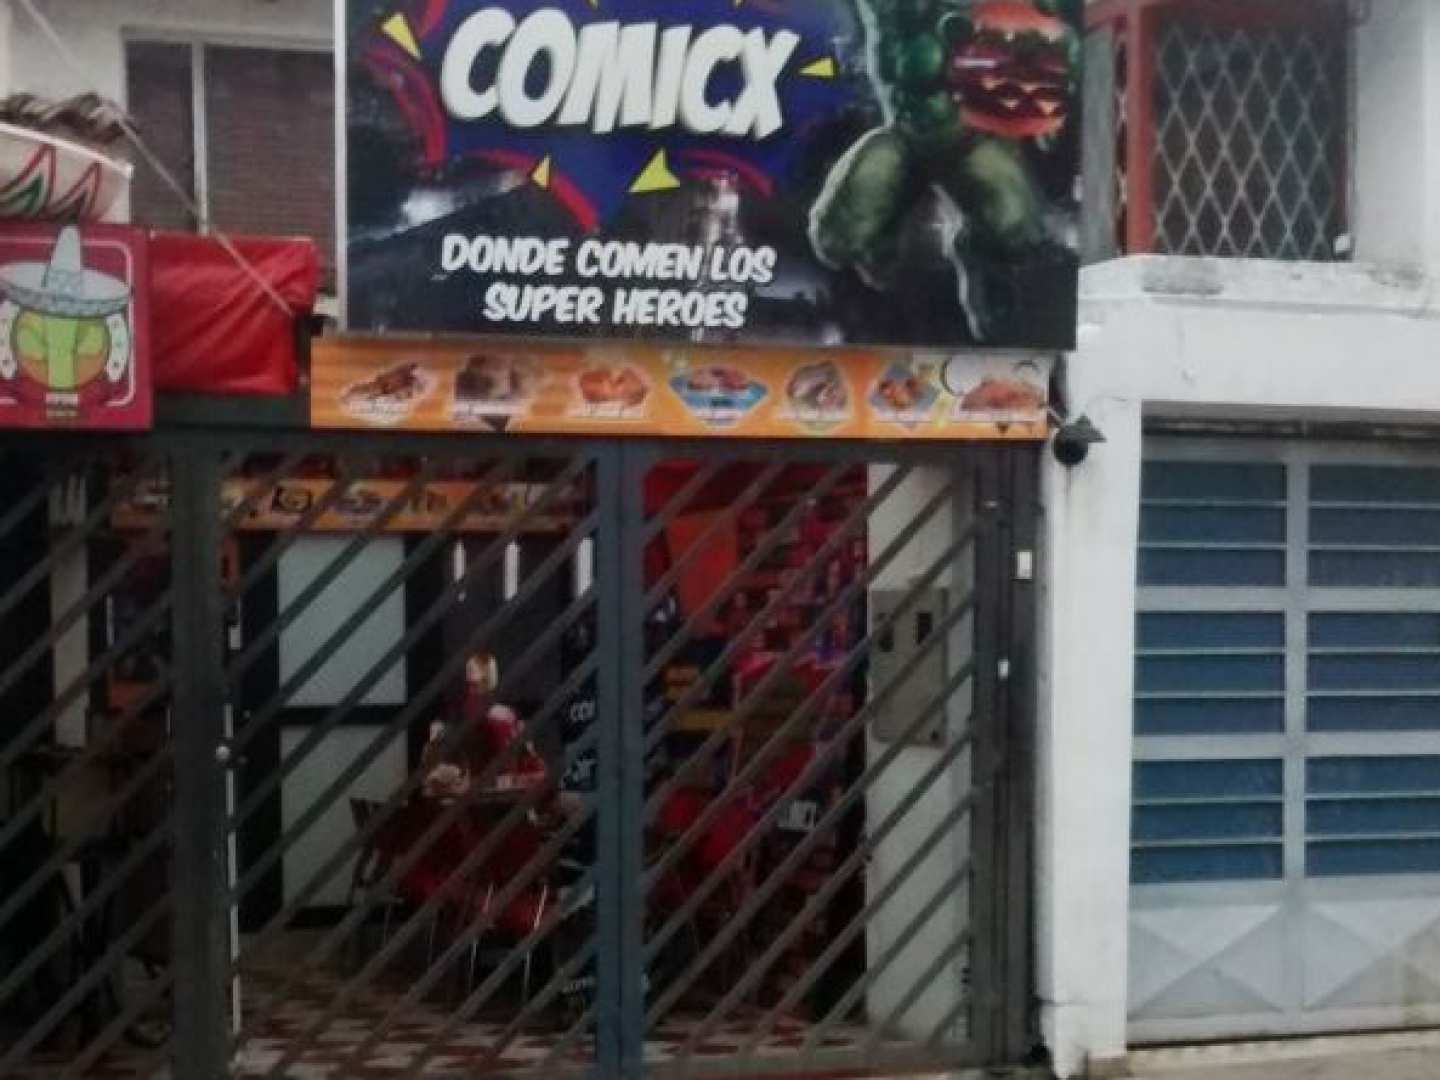 Comicx